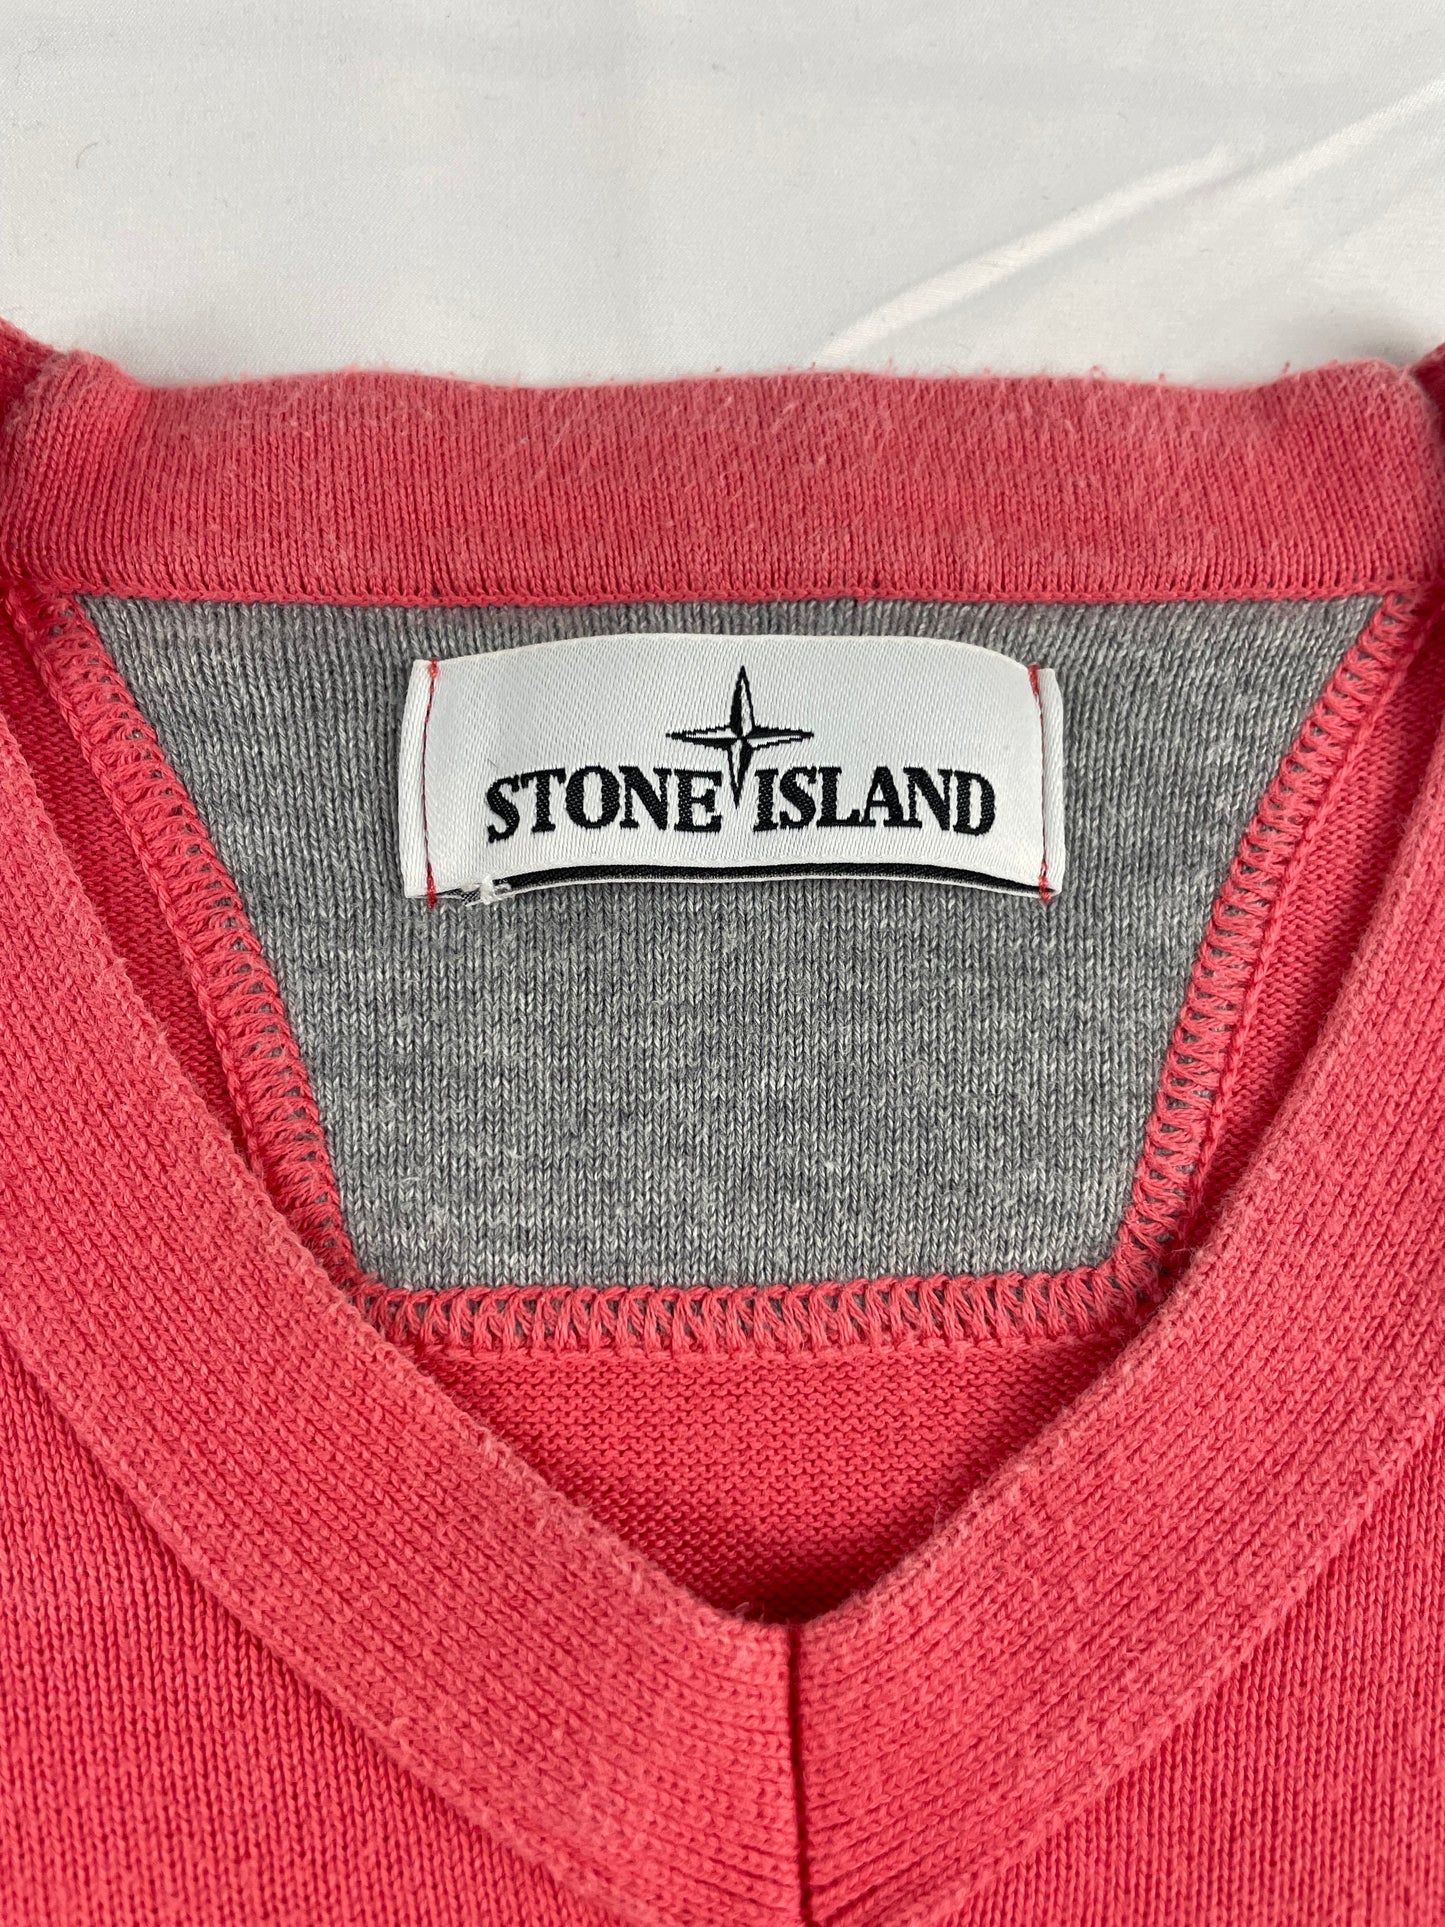 Vintage Stone Island Pullover lachsfarben S